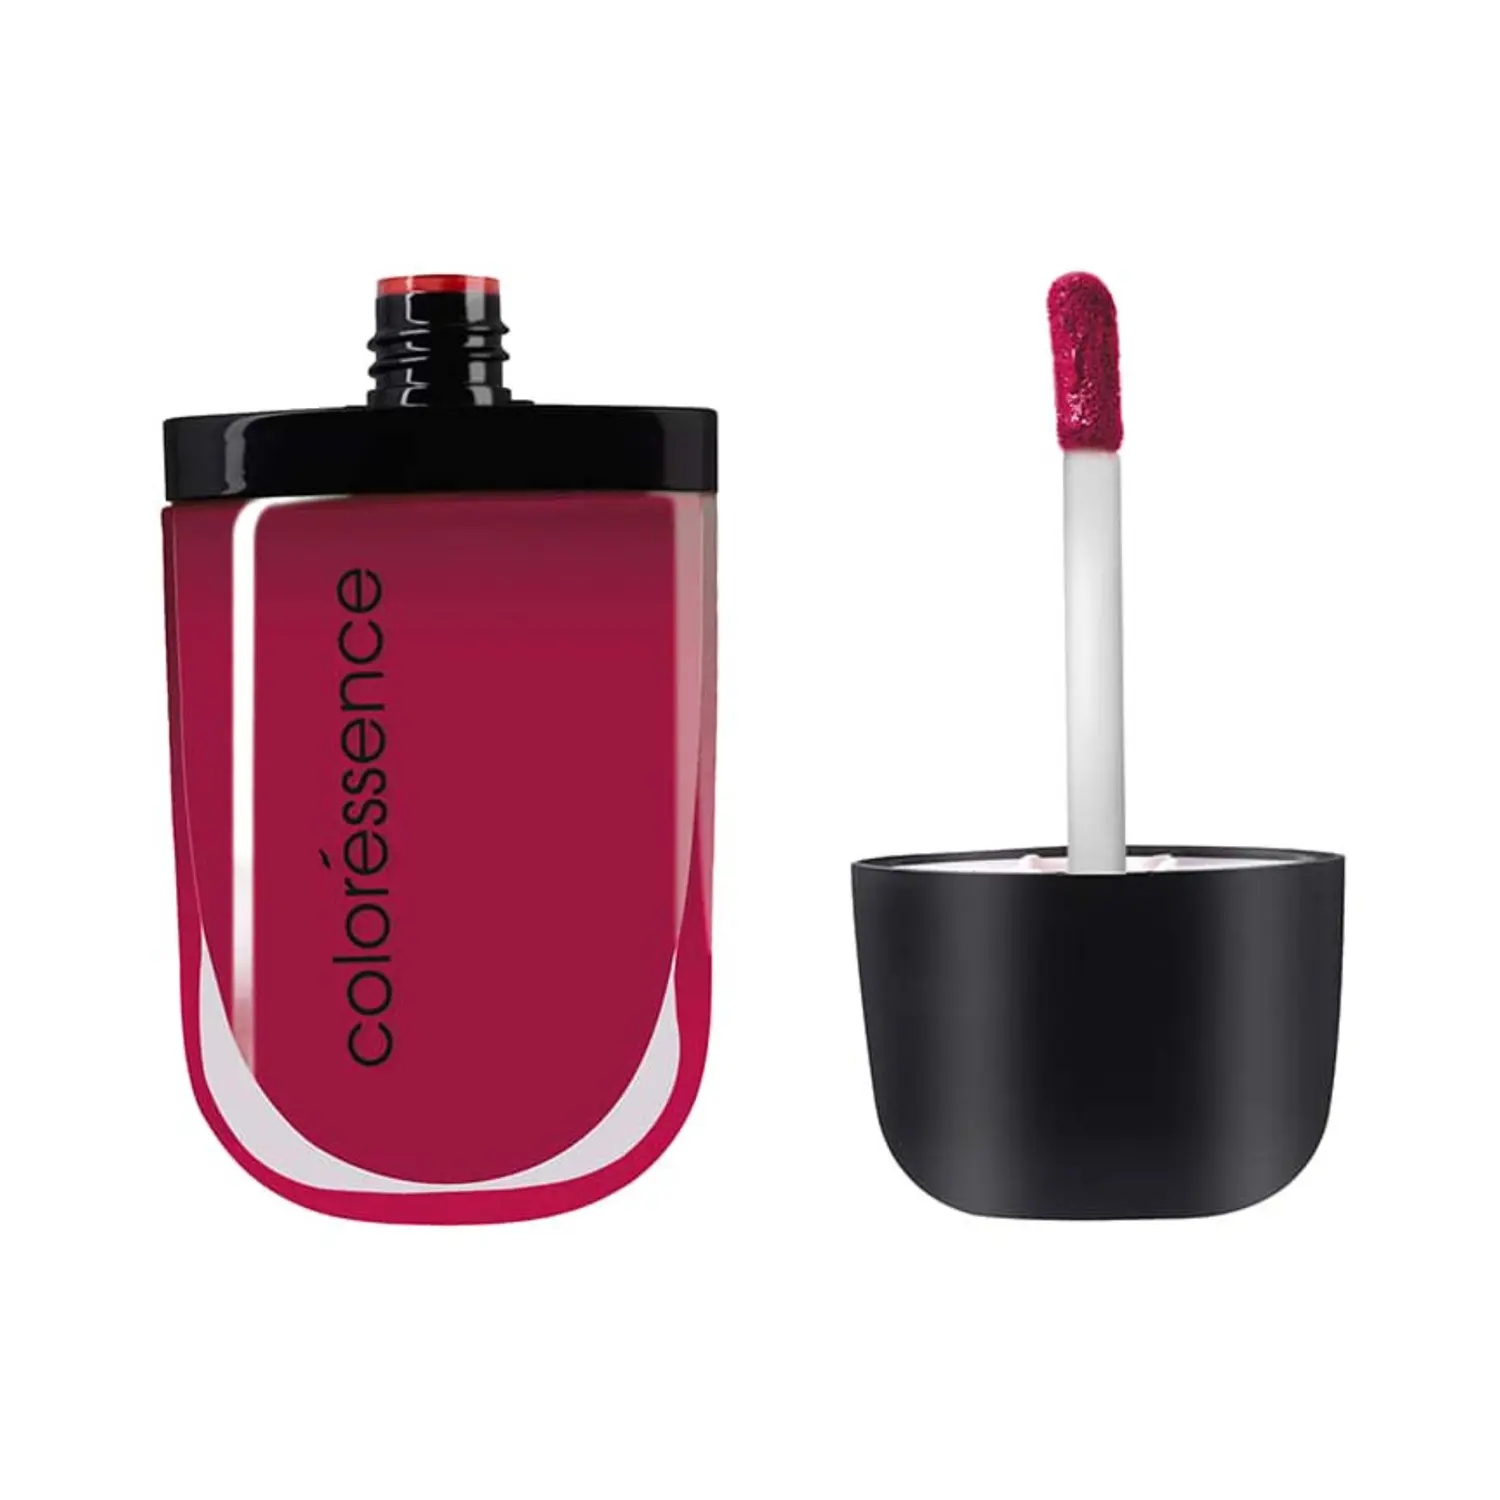 Coloressence | Coloressence Intense Soft Matte Liquid Lip Color Lipstick - Antique Ruby (8ml)